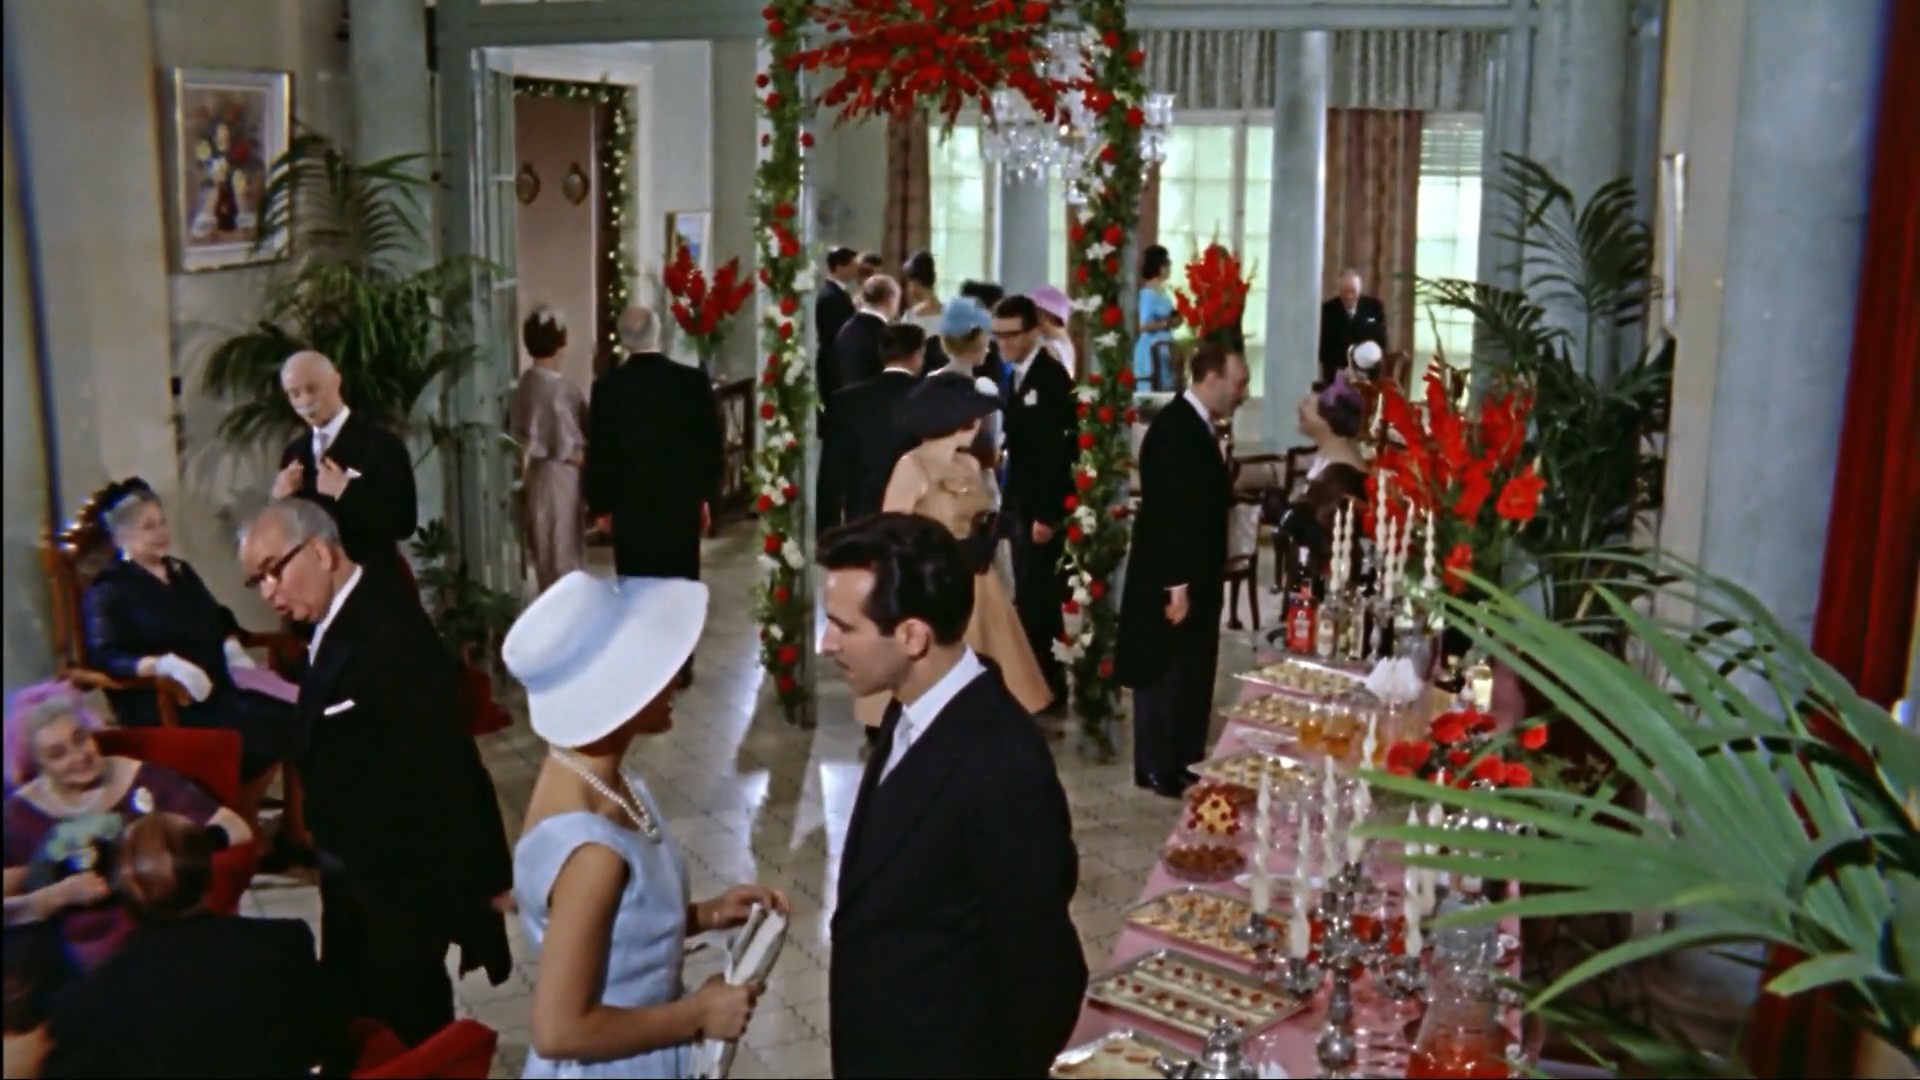 La boda era a las doce (1964)4.jpg